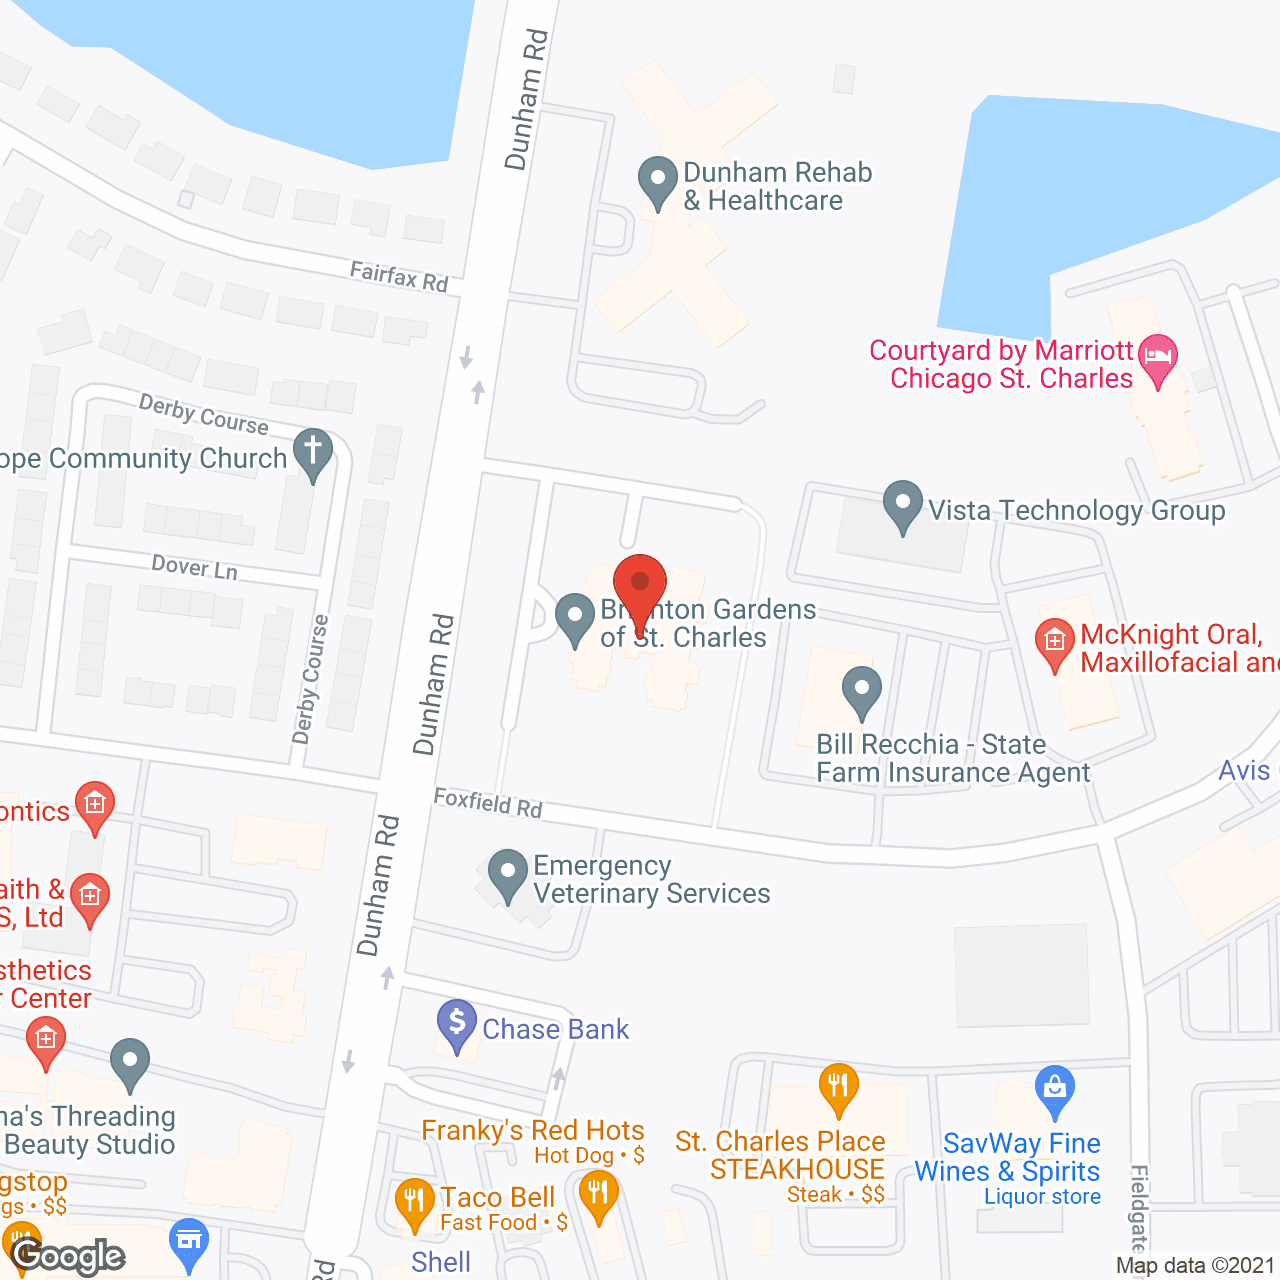 Brighton Gardens of St. Charles in google map